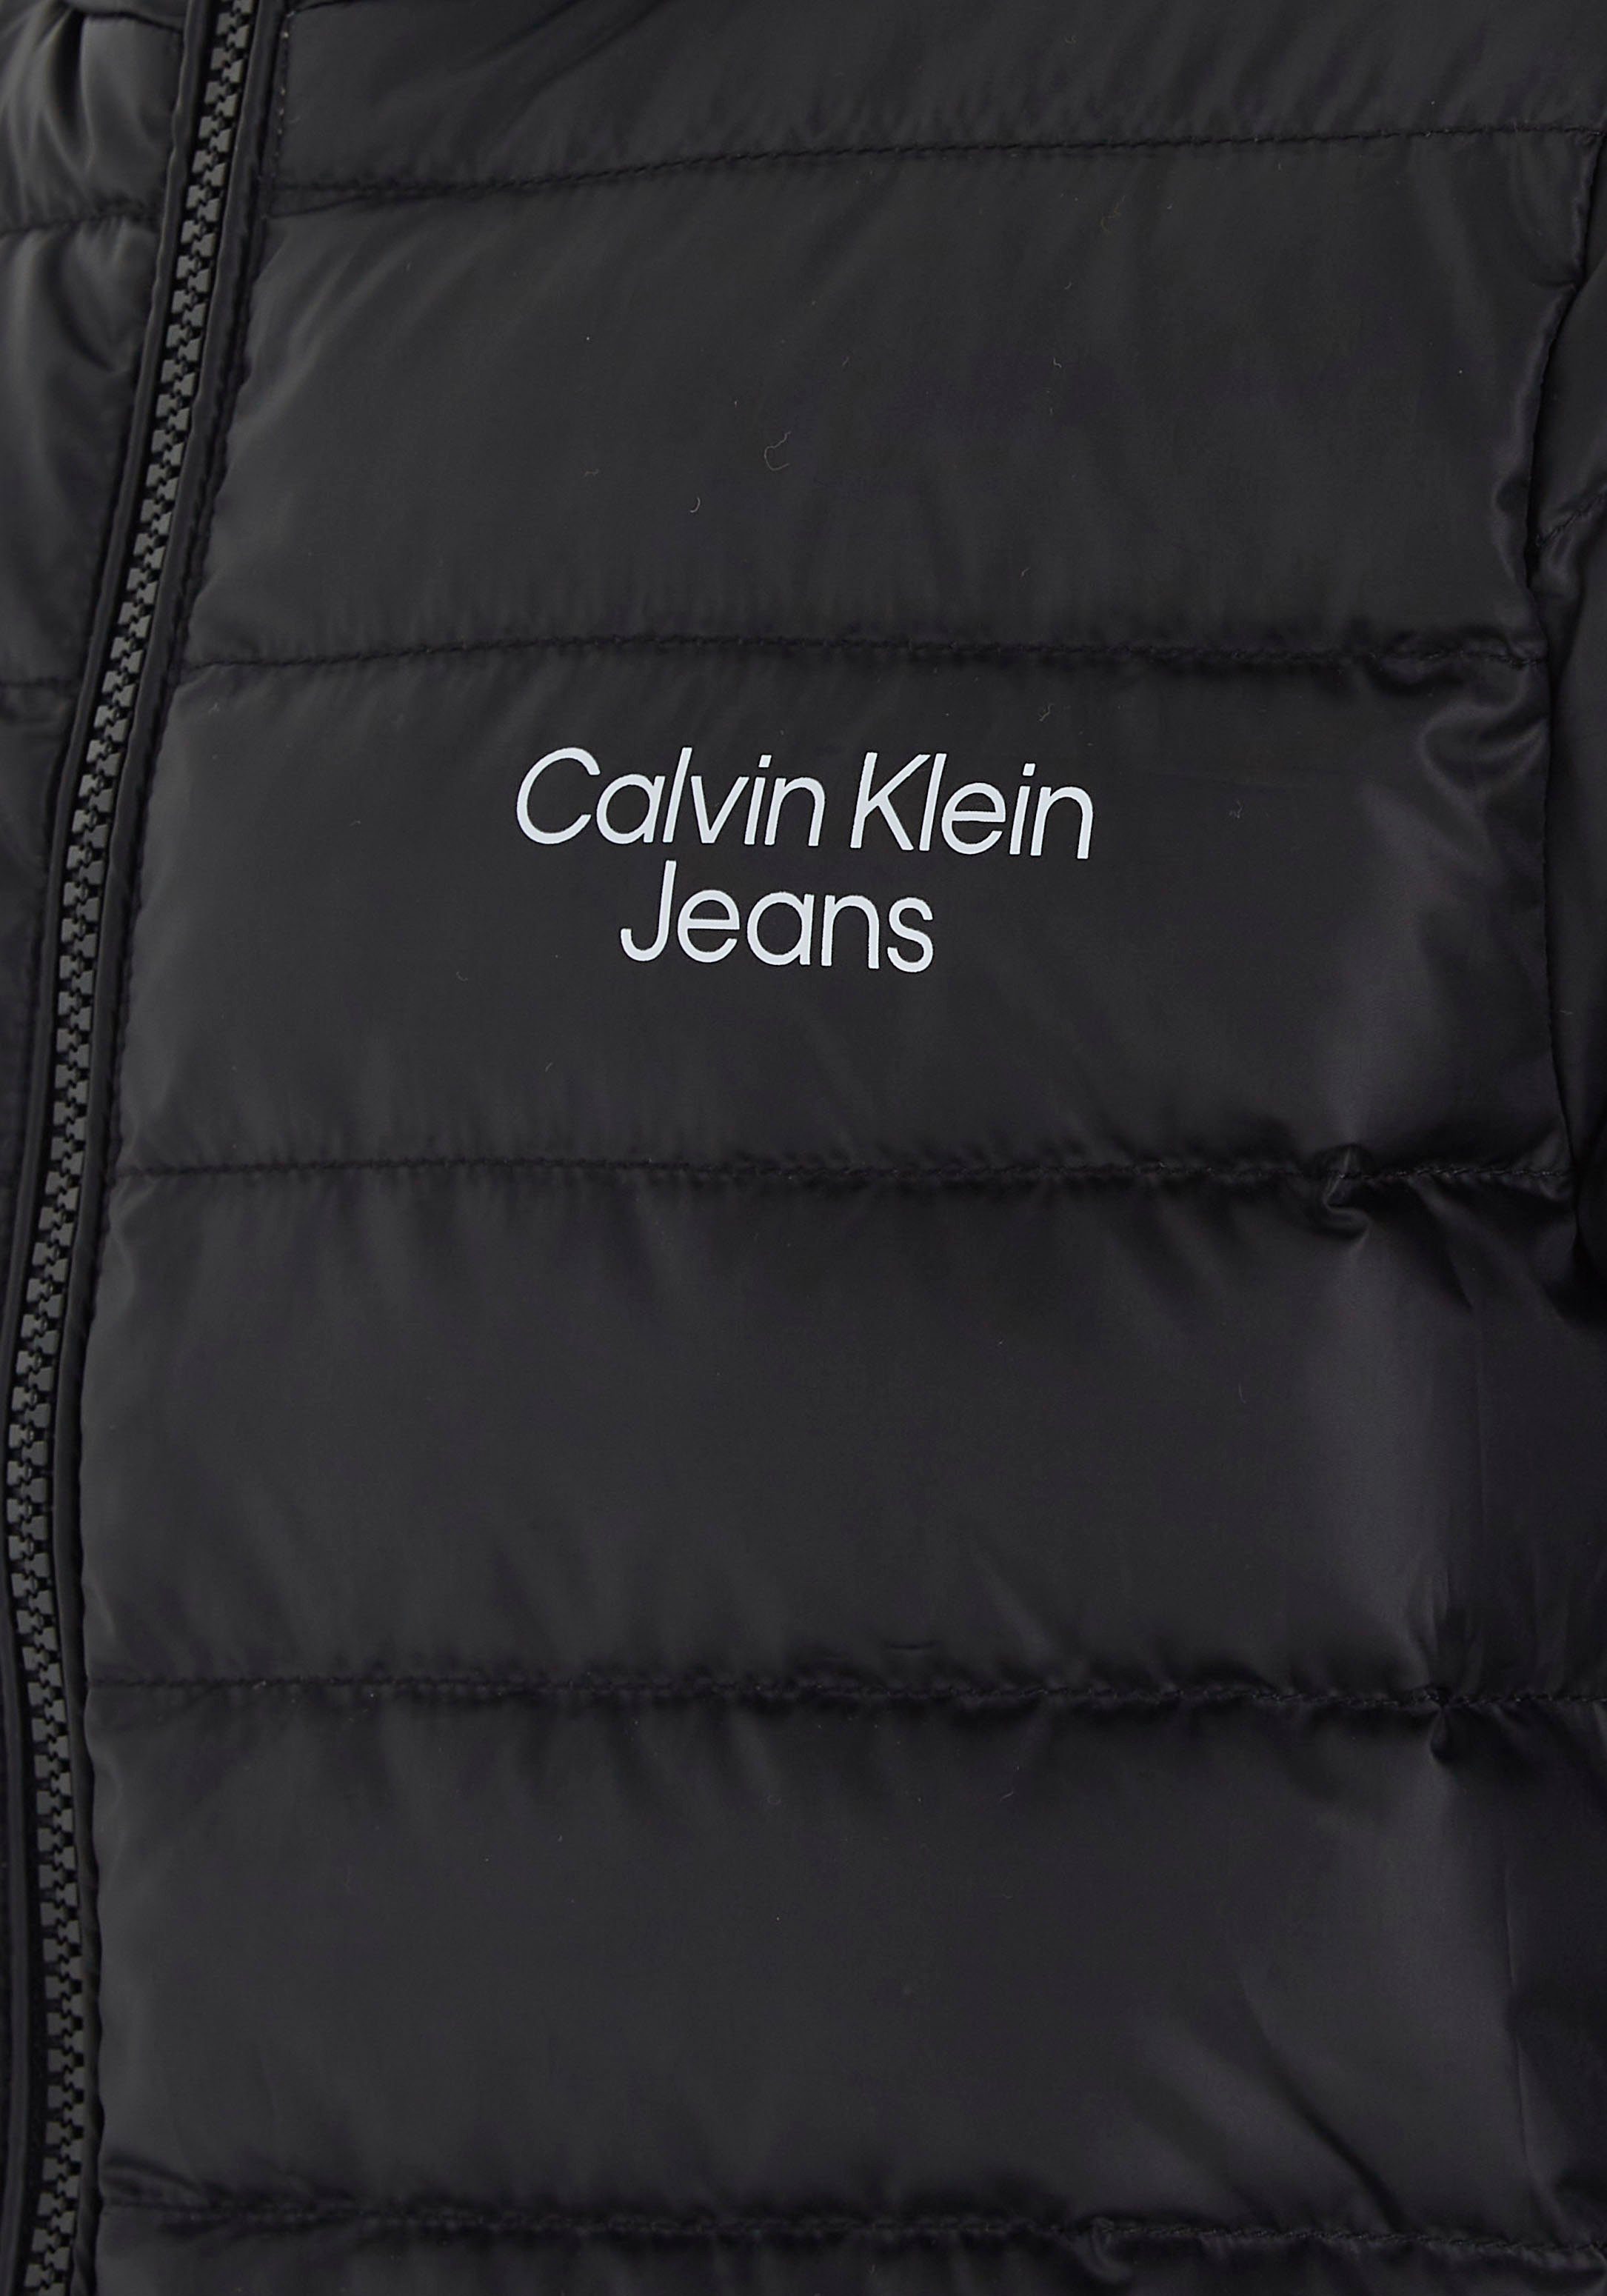 JACKET Jeans Calvin LW LOGO Klein Steppjacke DOWN